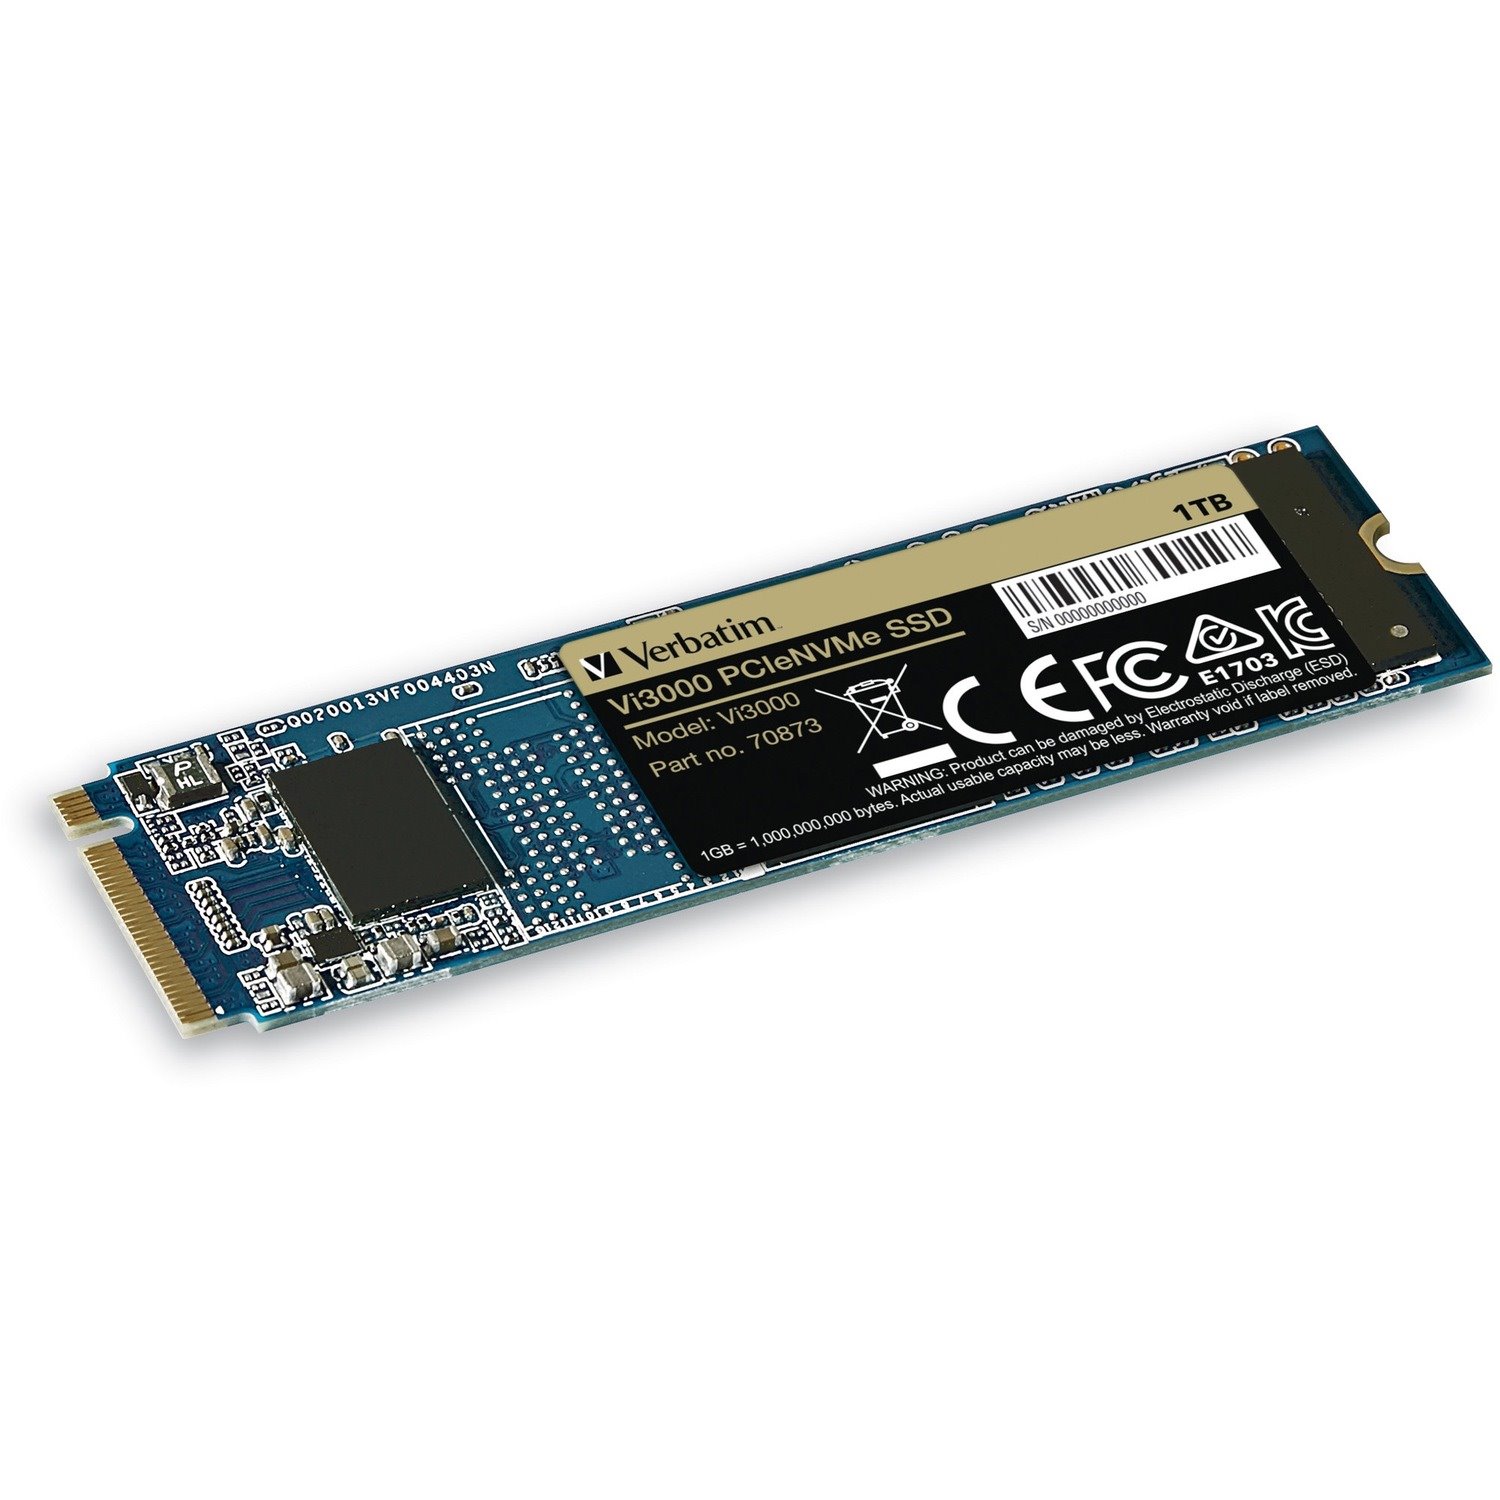 Verbatim Vi3000 1 TB Solid State Drive - M.2 2280 Internal - PCI Express NVMe (PCI Express NVMe 3.0 x4)